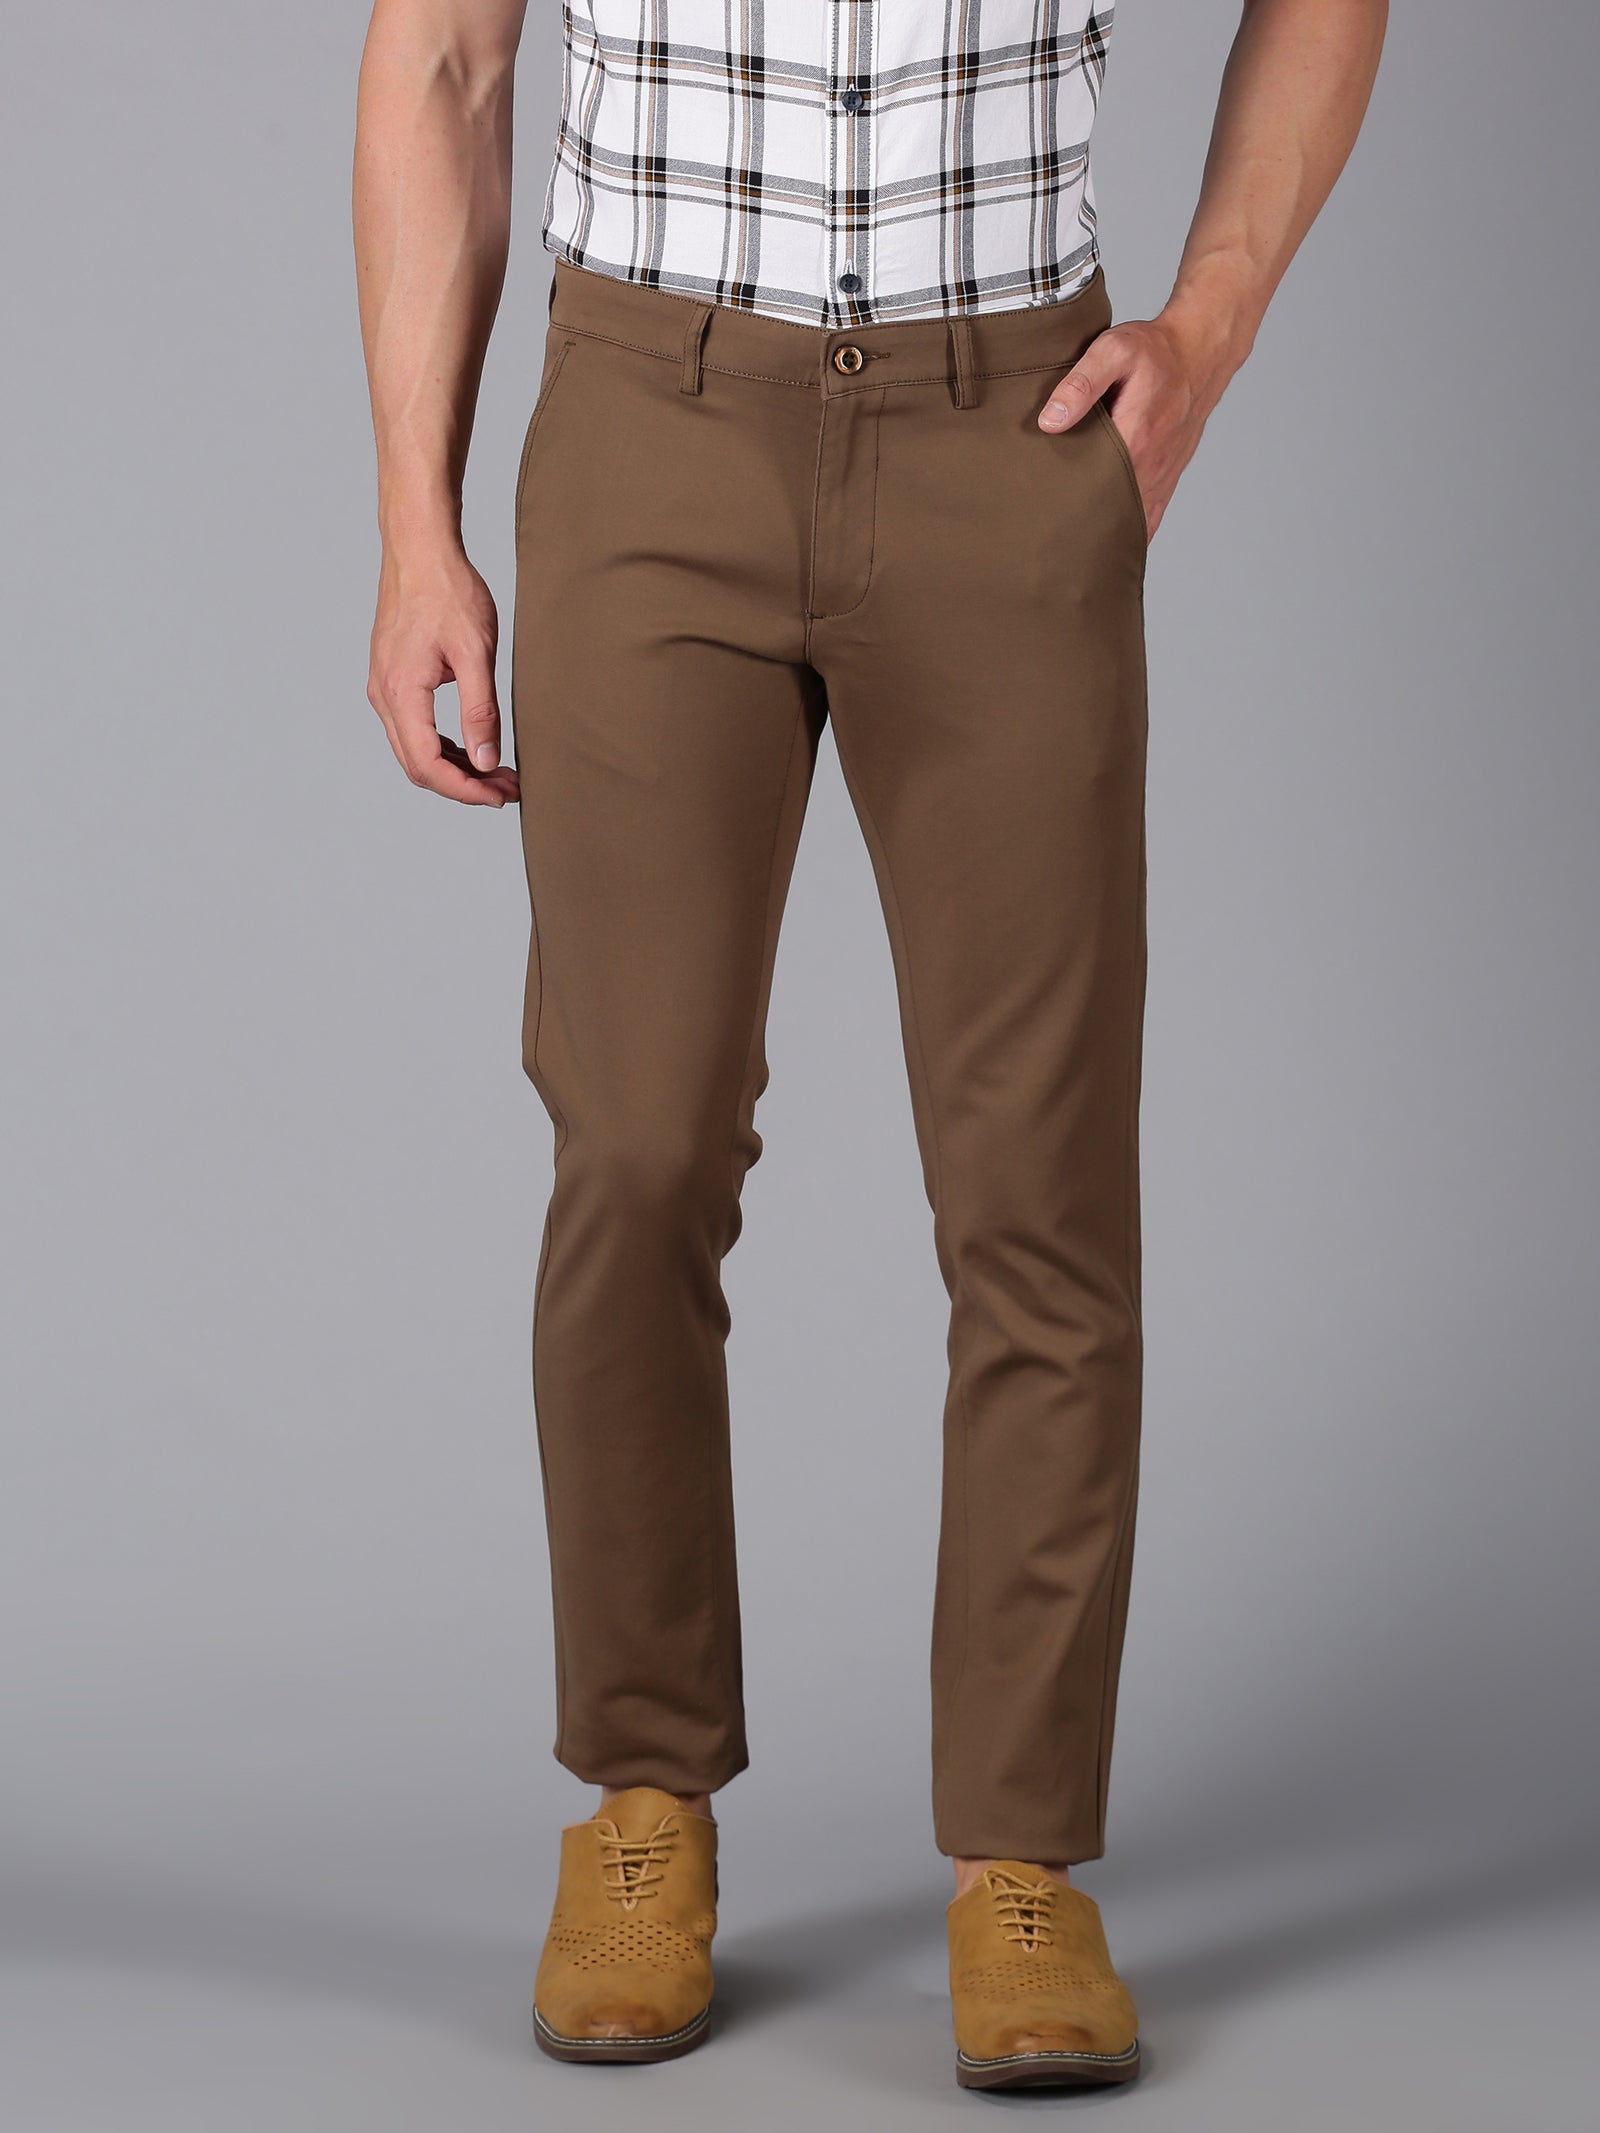 Buy Light Brown Trousers  Pants for Men by Ben Sherman Online  Ajiocom